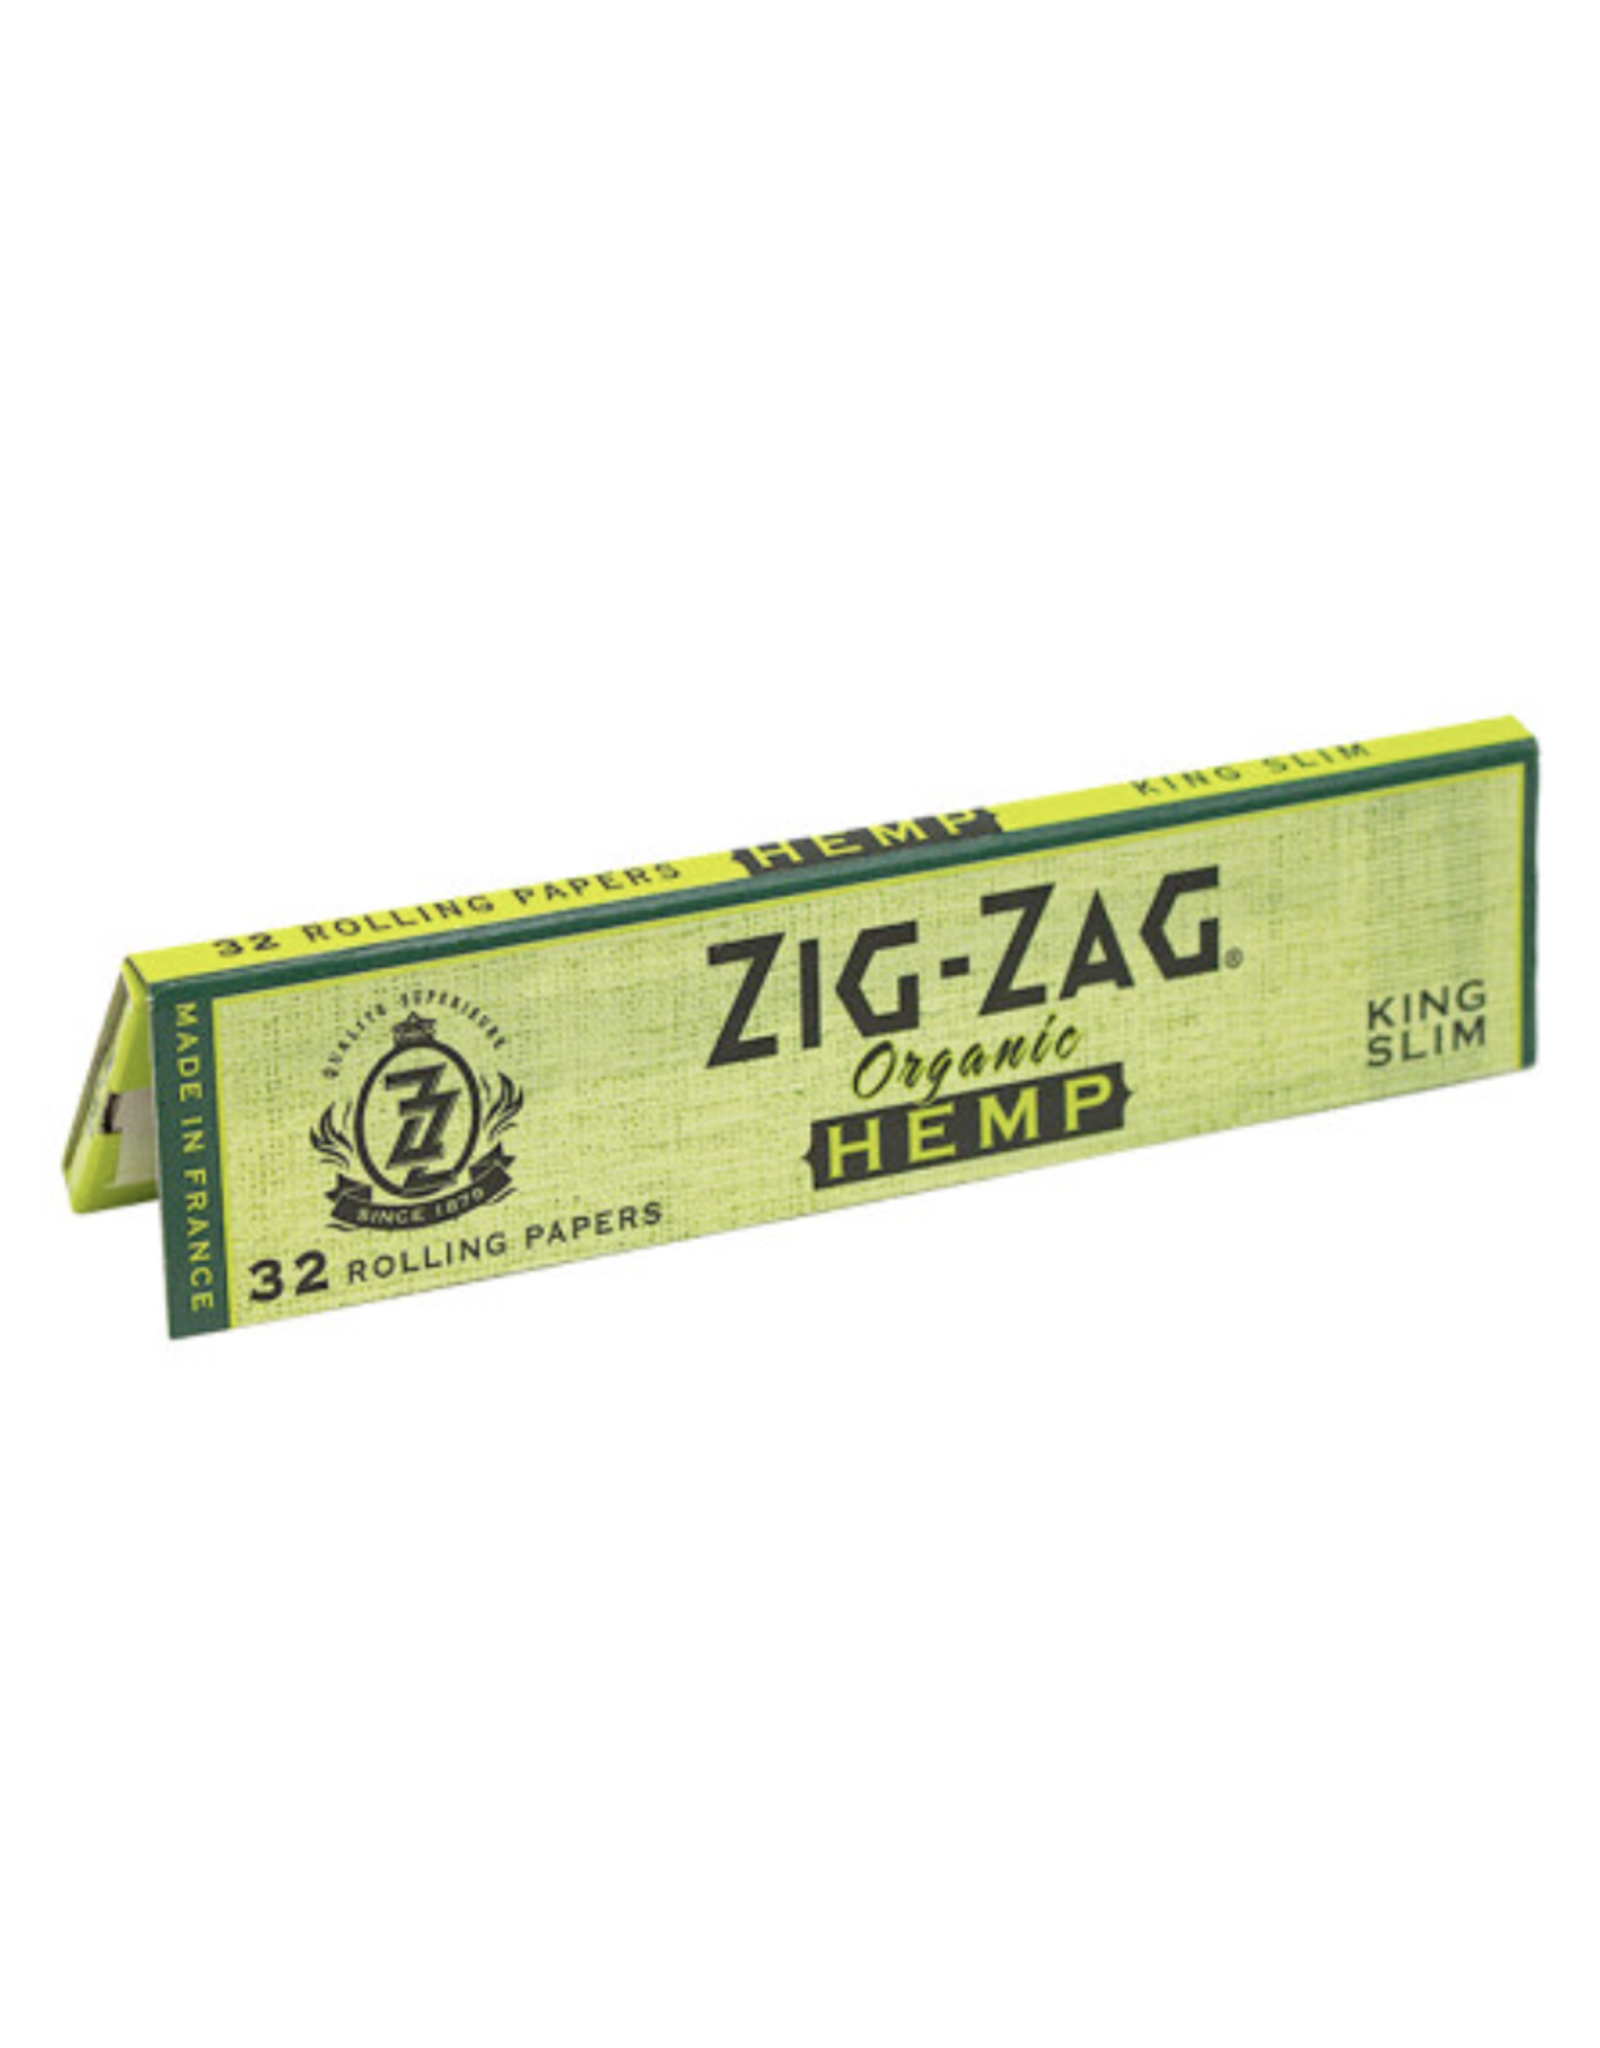 Zig-Zag King Slim Hemp Papers